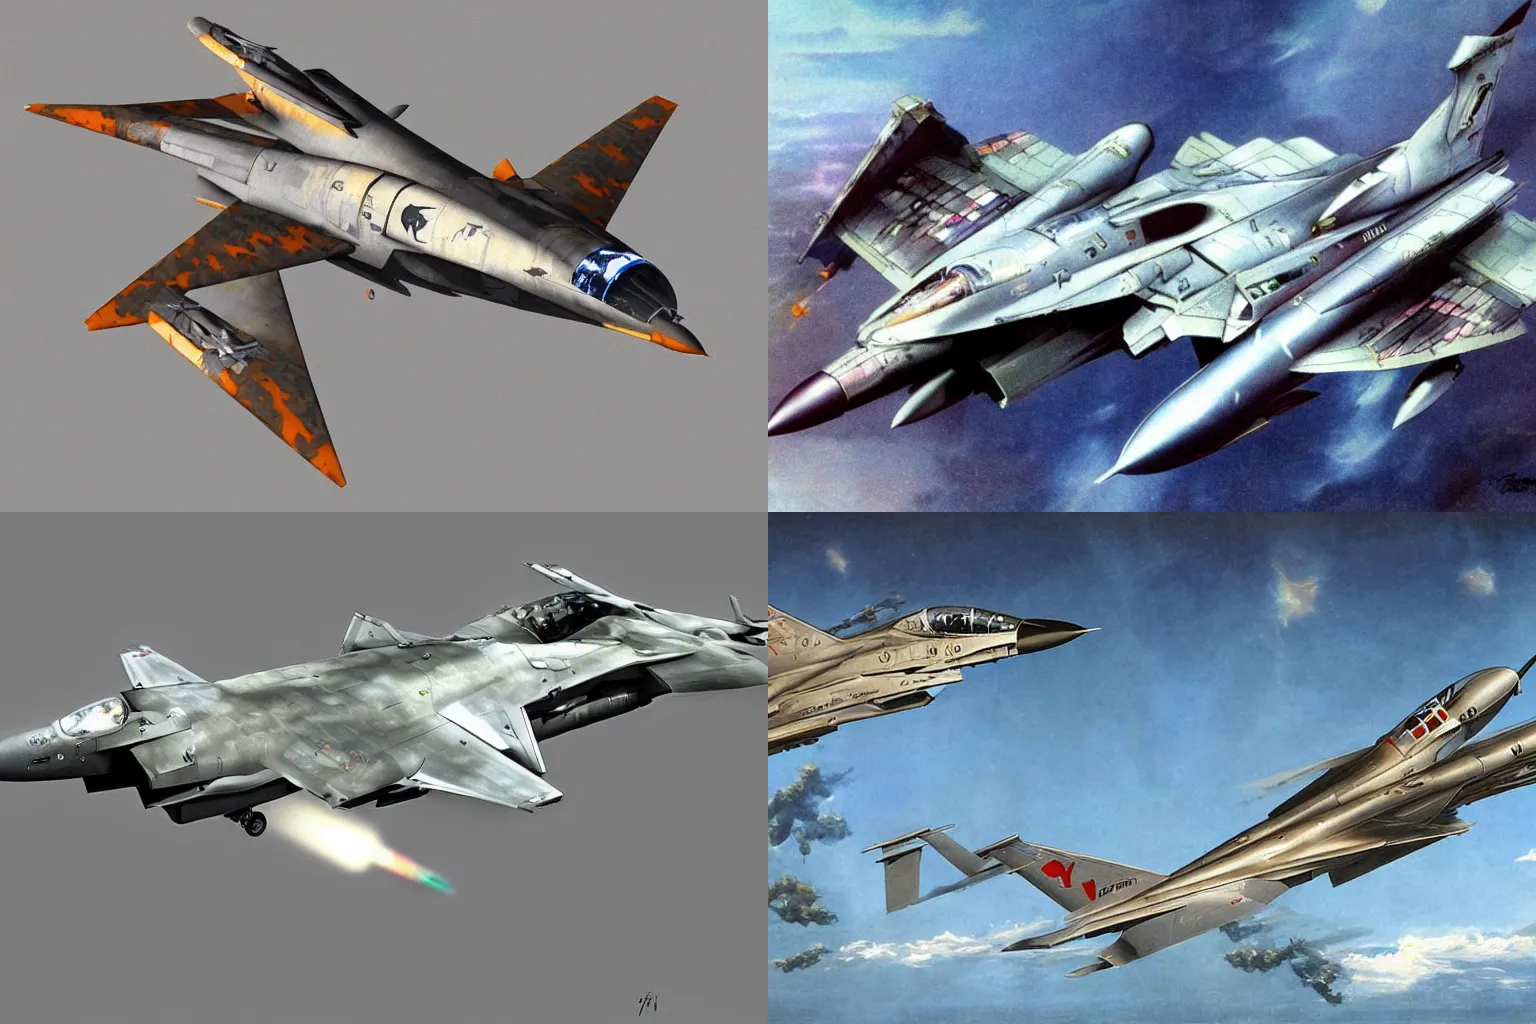 Prompt: iconic fighter jet concept designed by yoshitaka amano, tomcat raptor hornet falcon, style of frank frazetta